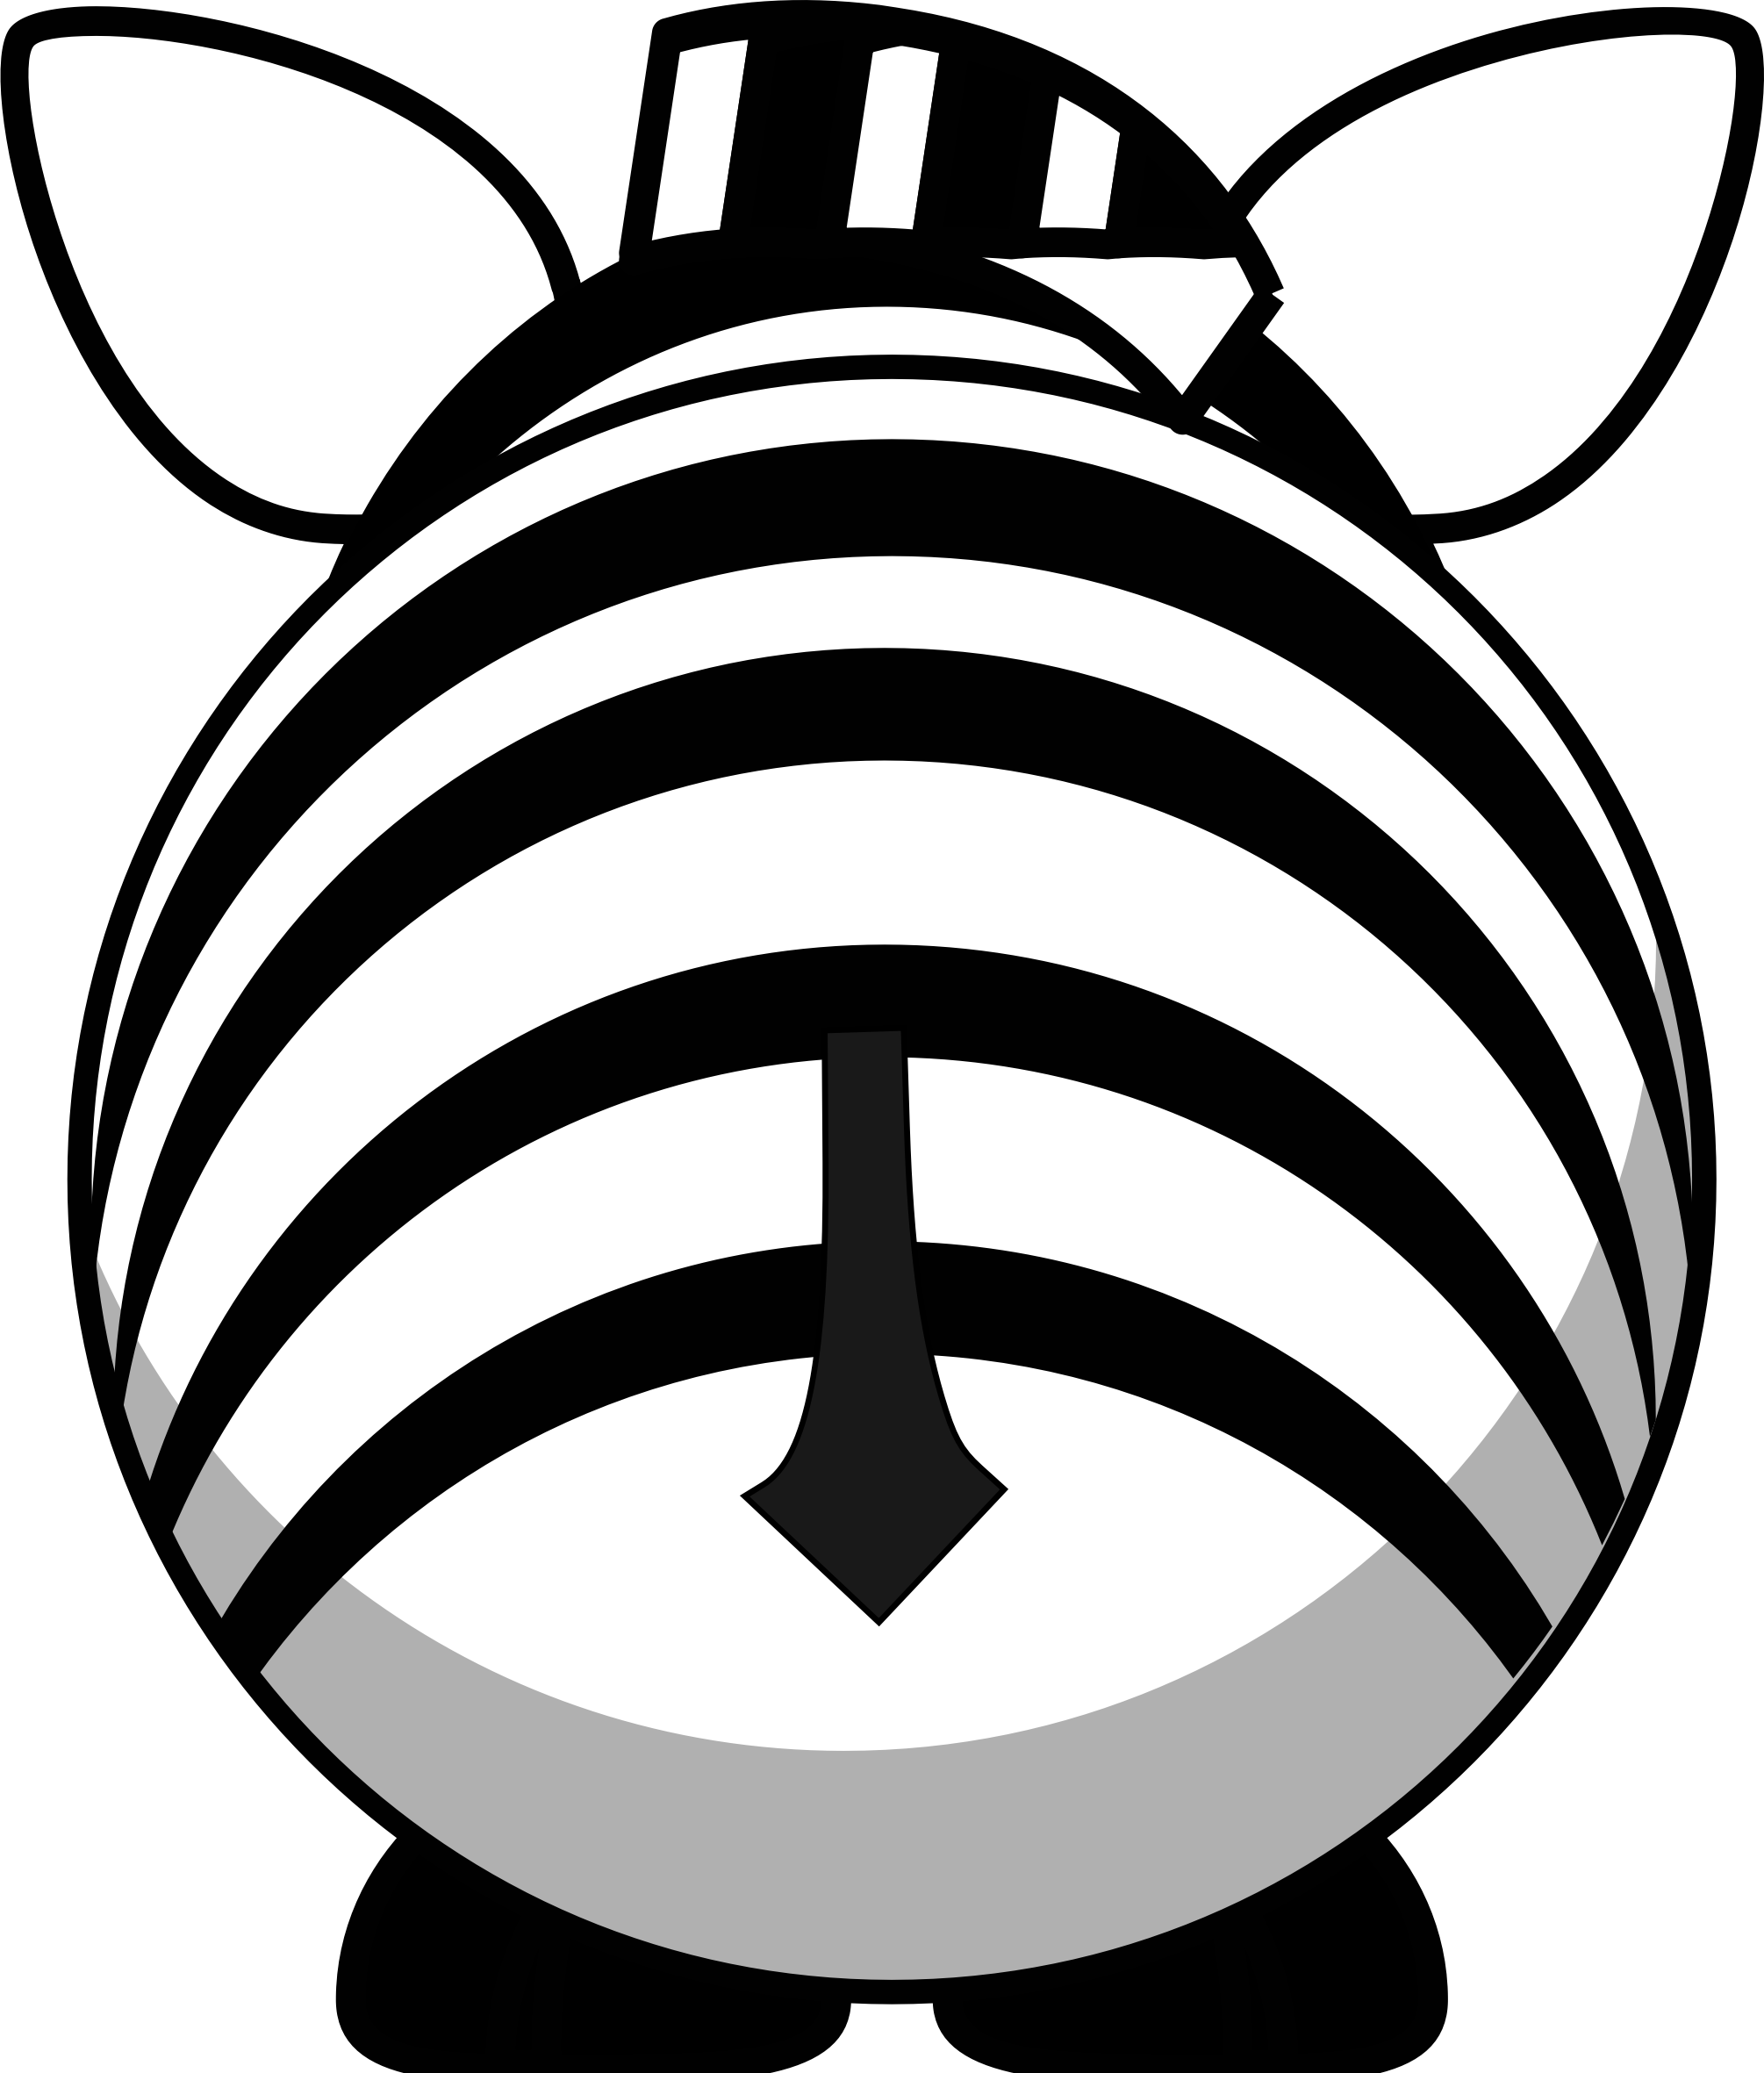 Clipart zebra drawn.